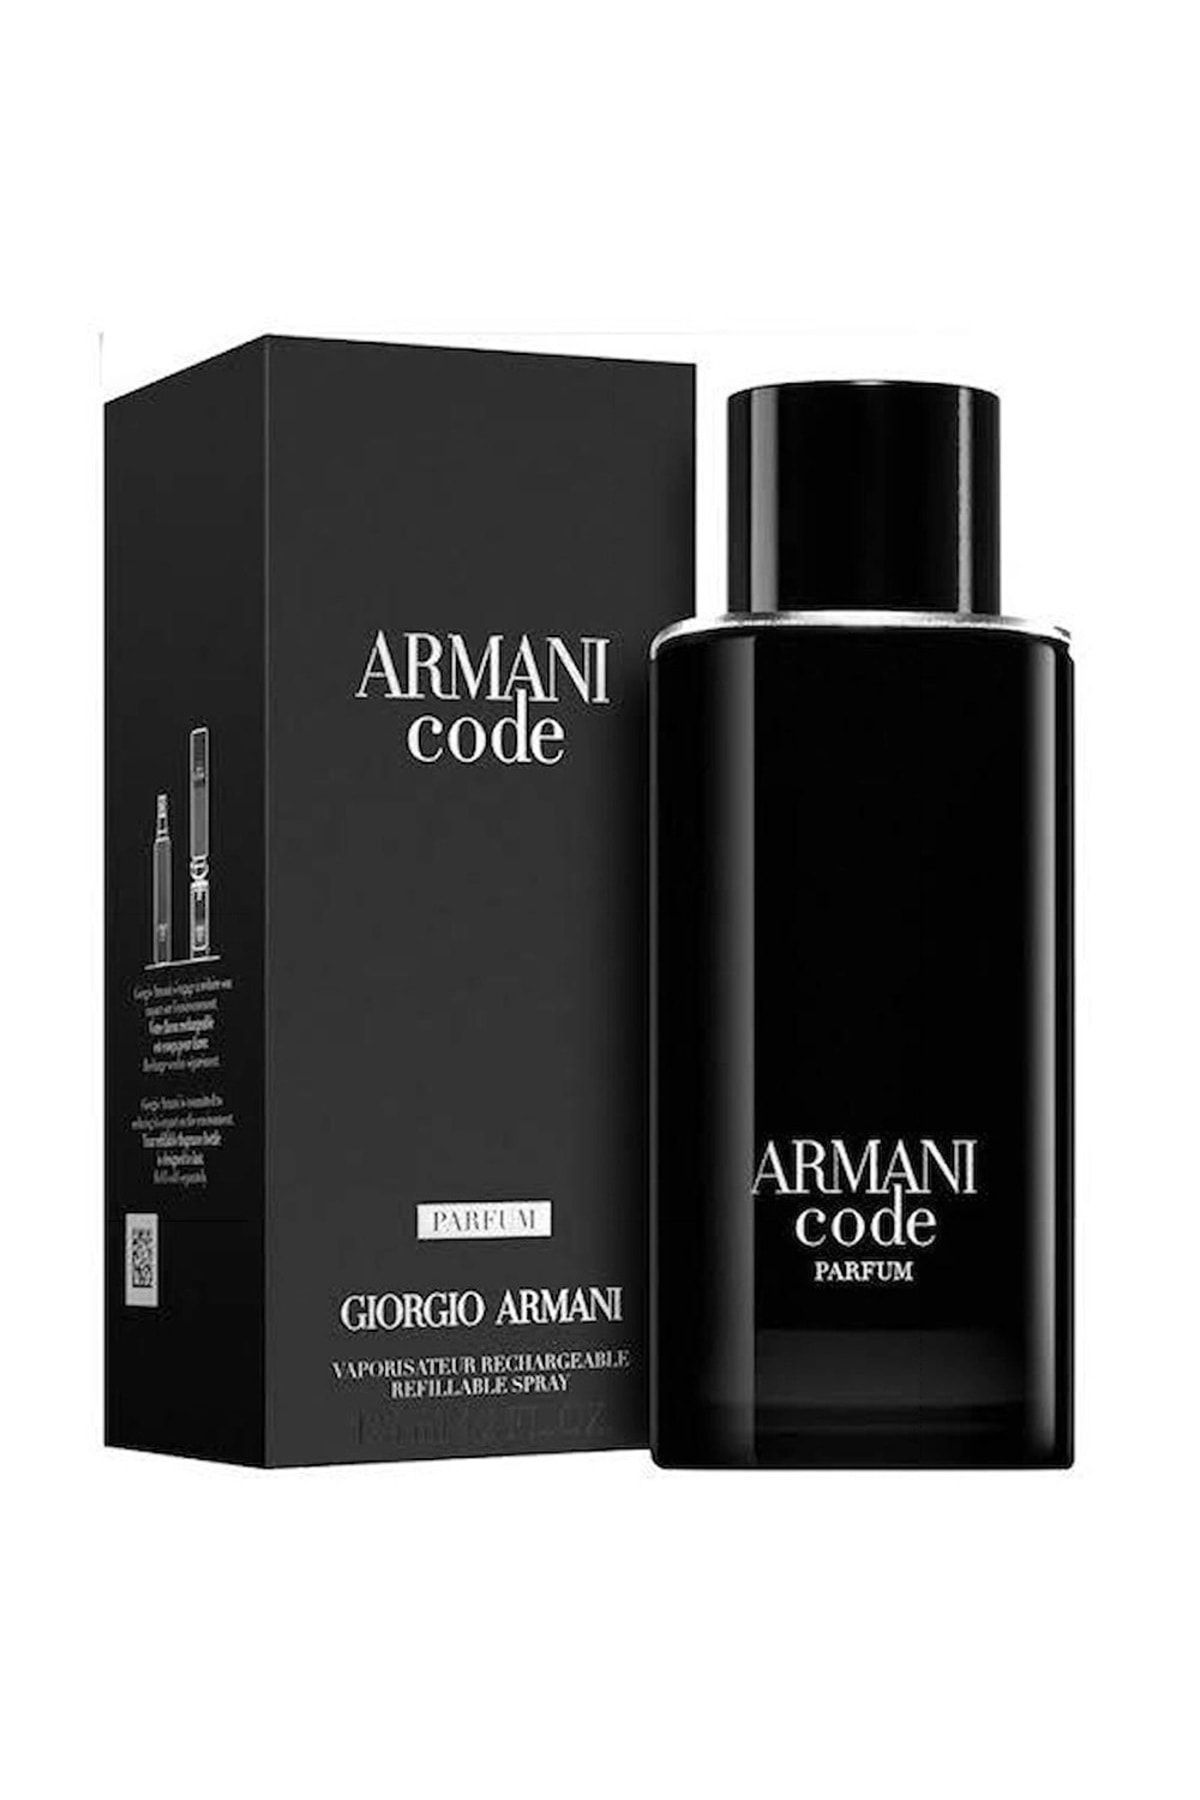 Code homme. Armani code Parfum мужской. Giorgio Armani Black code for men 125ml. Giorgio Armani Armani code 125. Giorgio Armani Armani code Parfum, 100 ml.